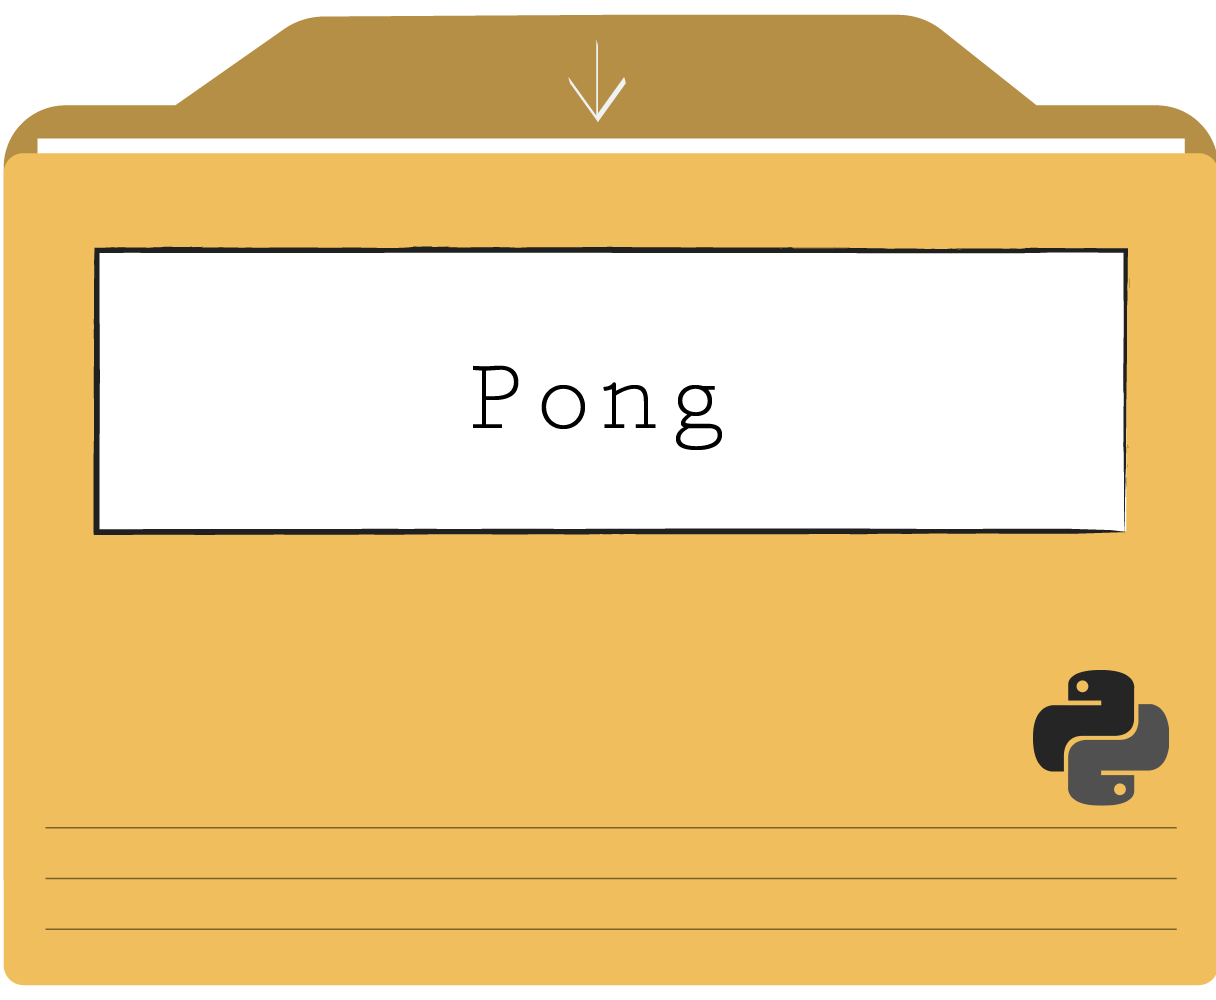 Pong thumbnail, pong game in progress